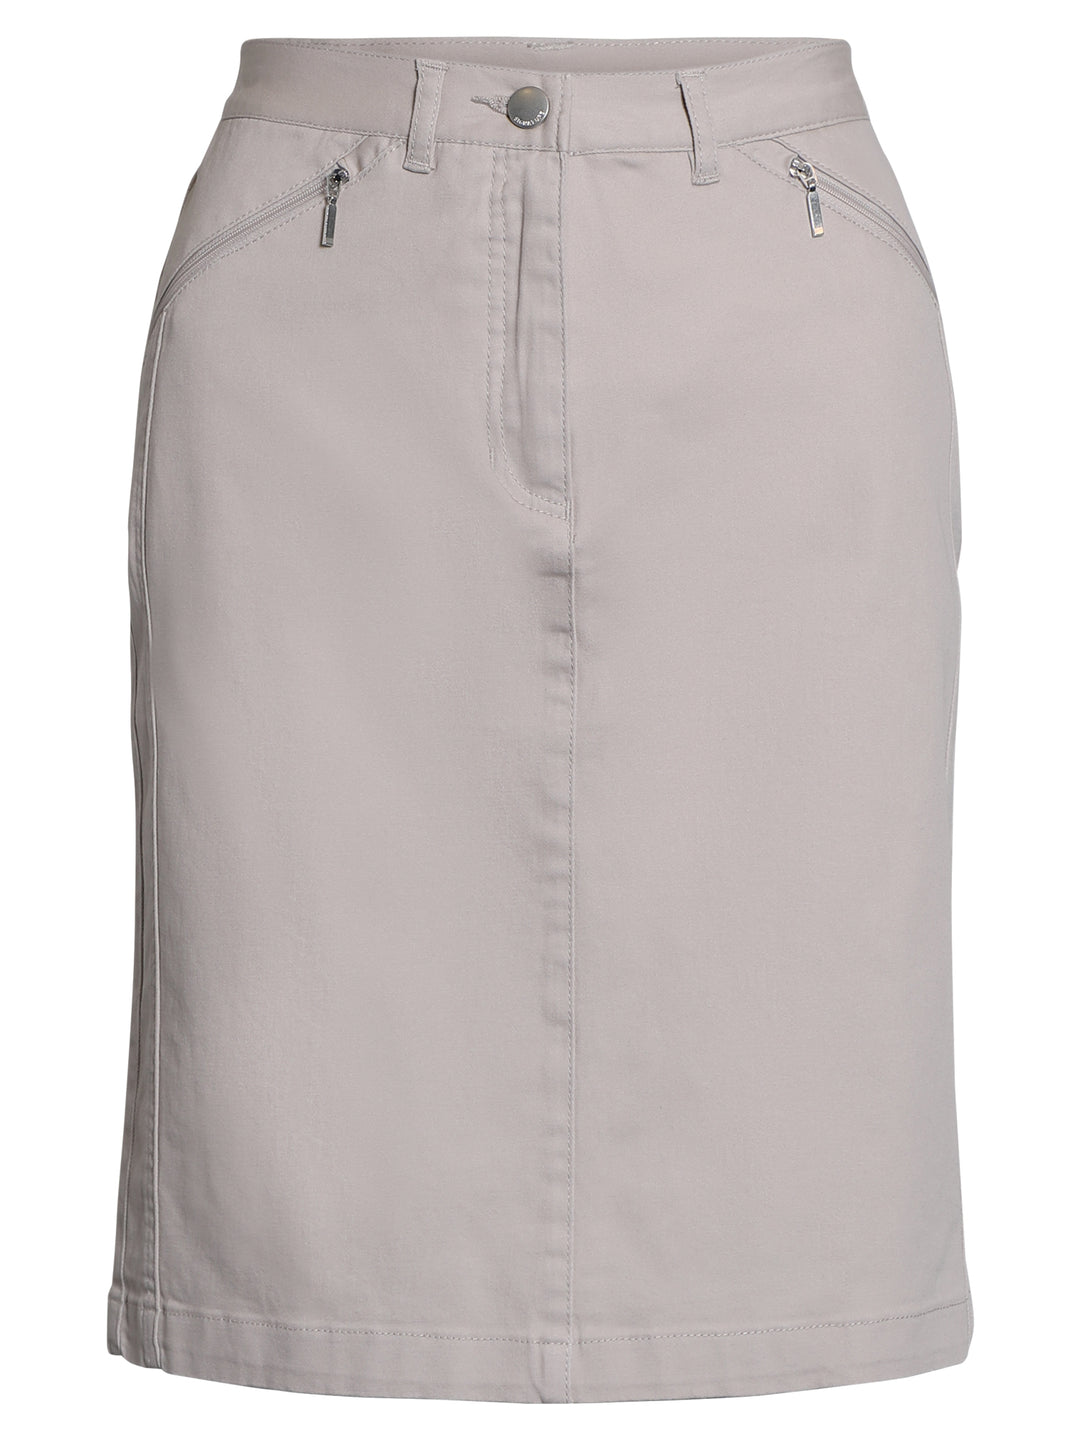 beige rechte rok op knielengte - brandtex - 206420 - grote maten - dameskleding - kledingwinkel - herent - leuven